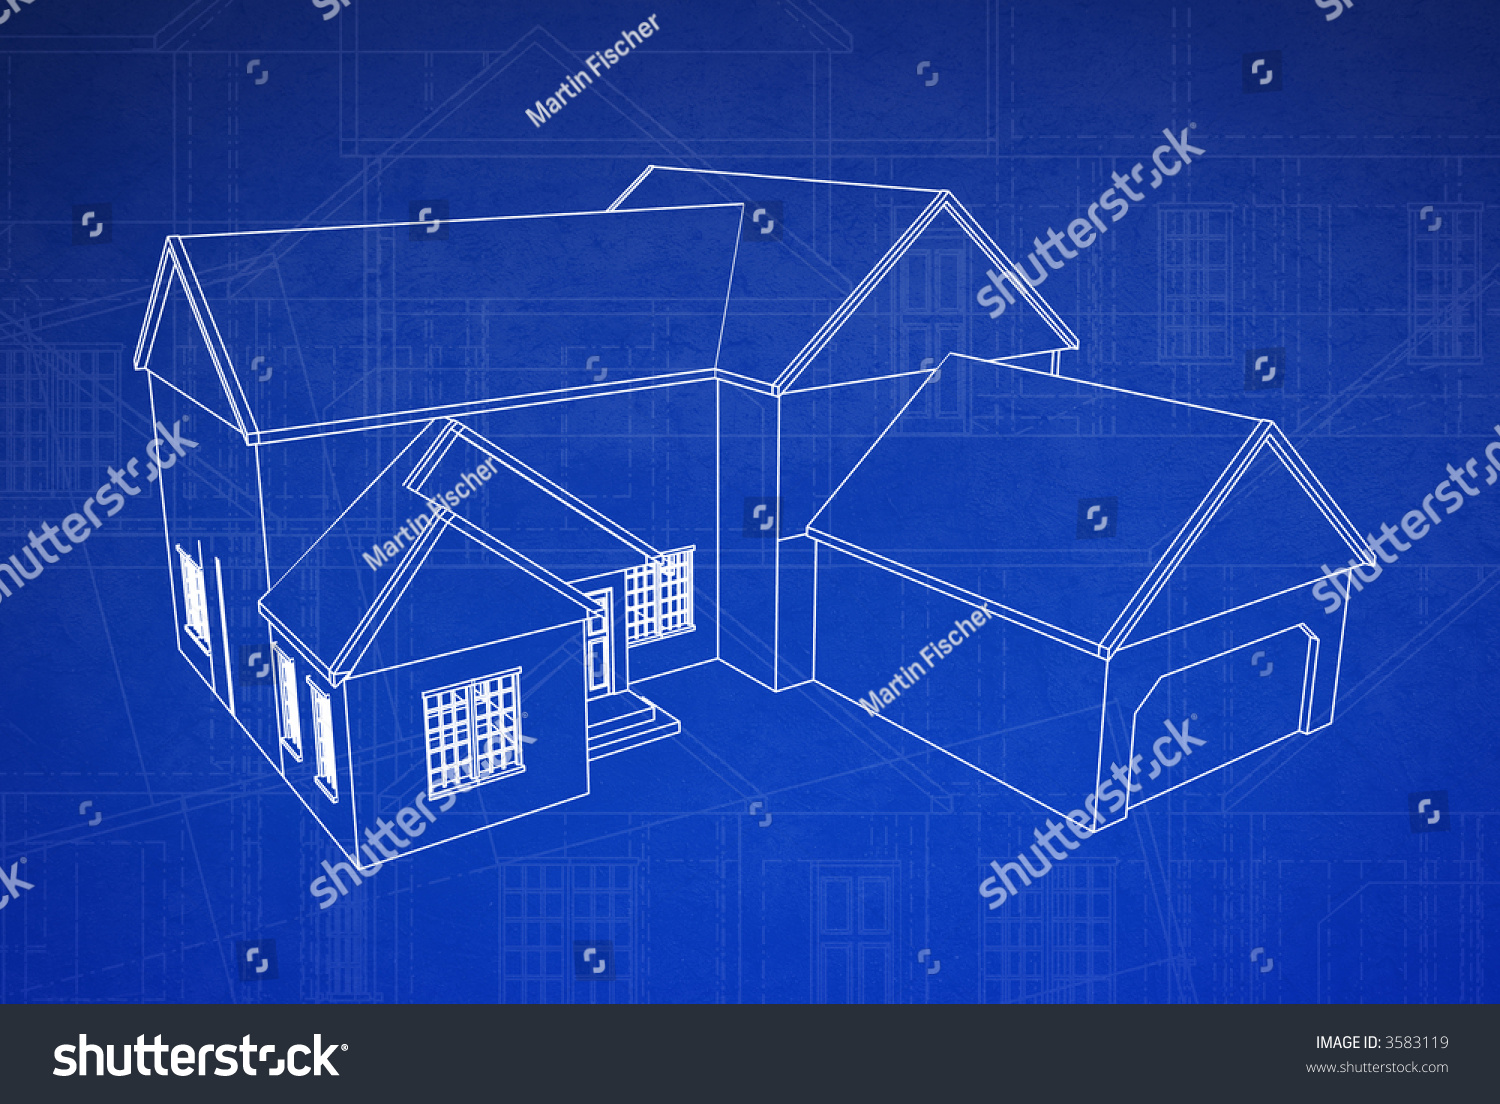 stock-photo--d-blue-print-style-rendered-house-on-grungy-floor-plan-schematics-3583119.jpg